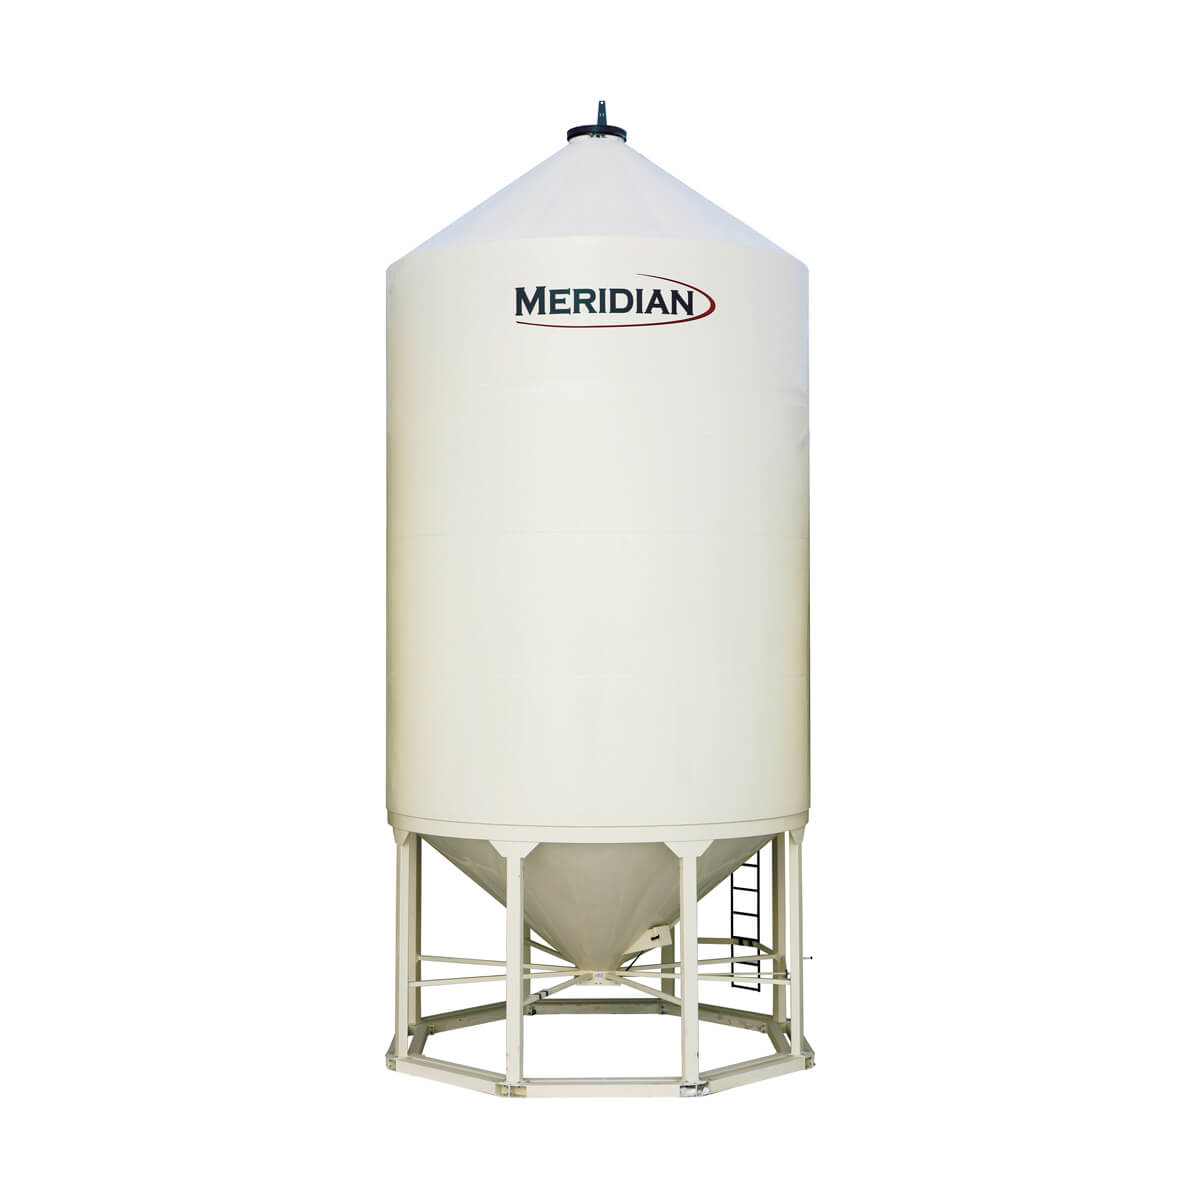 Meridian Multi-Purpose Smoothwall Fertilizer Bin with Manhole - MP 1620